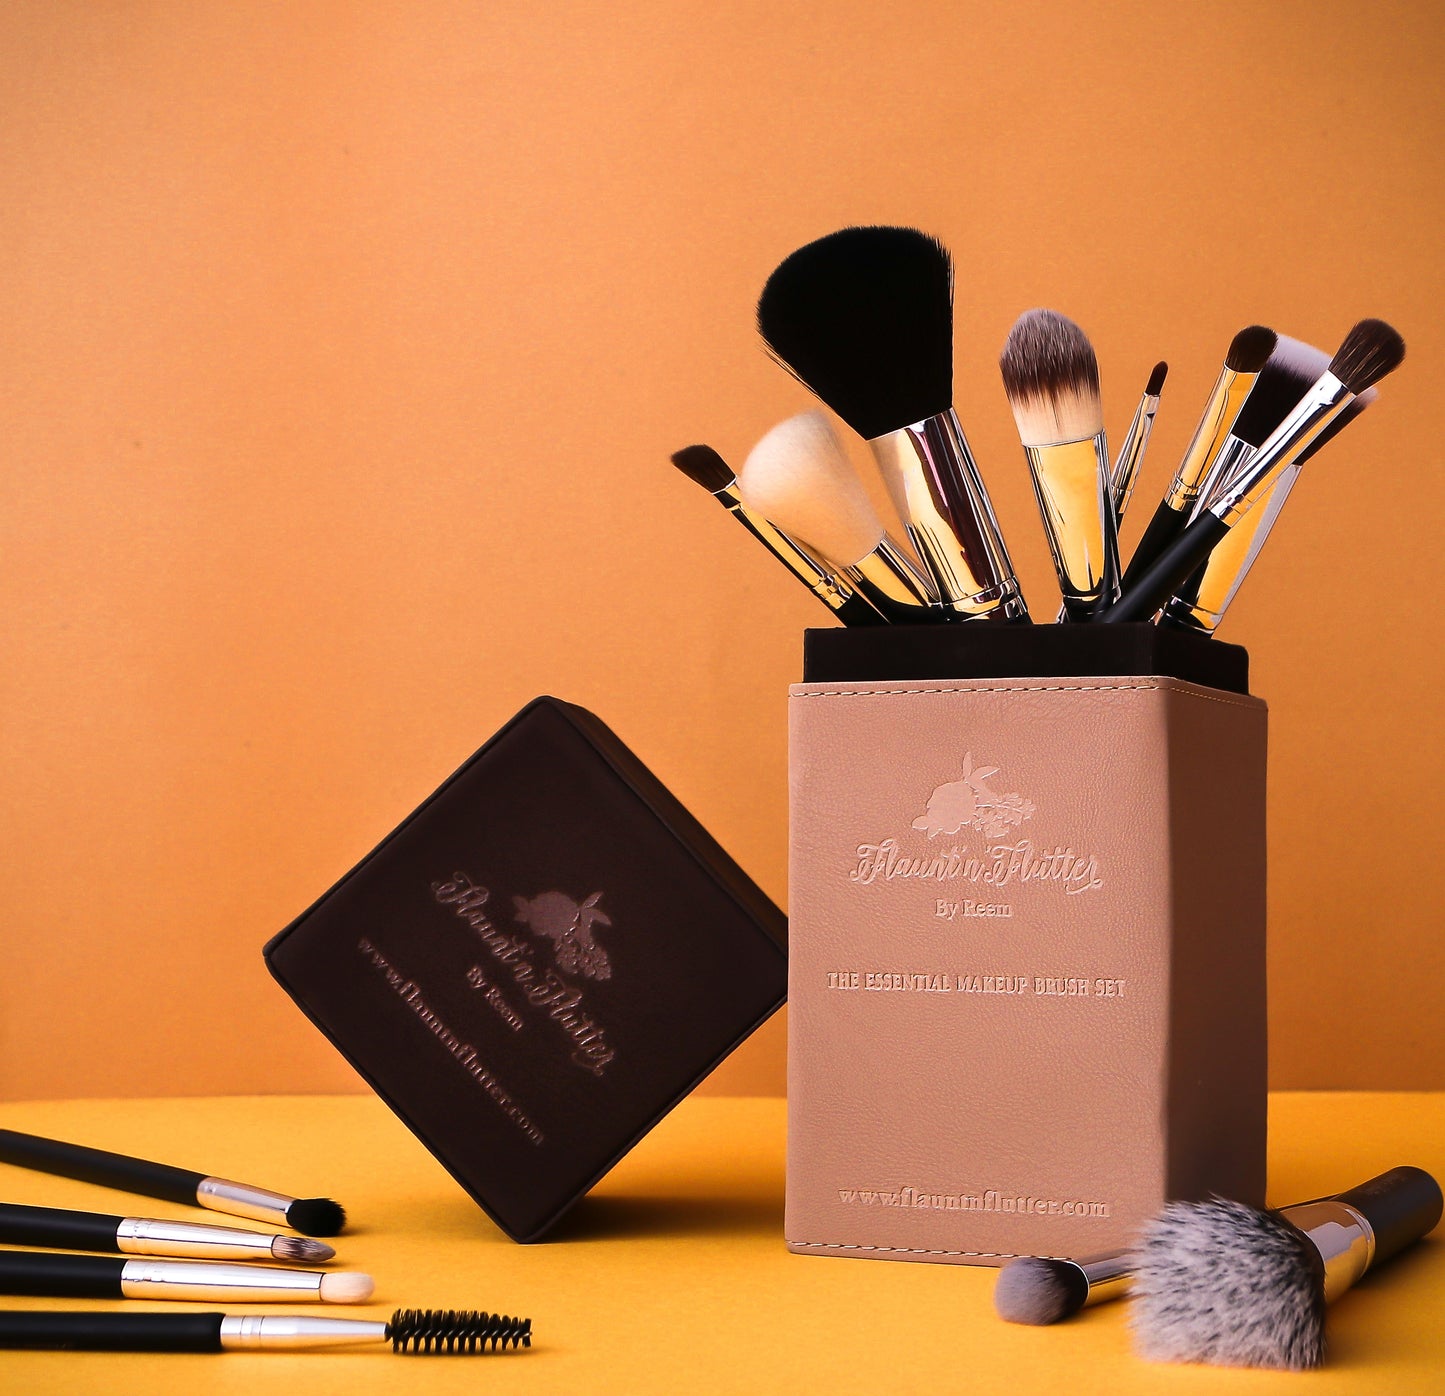 Essential Makeup Brush Set